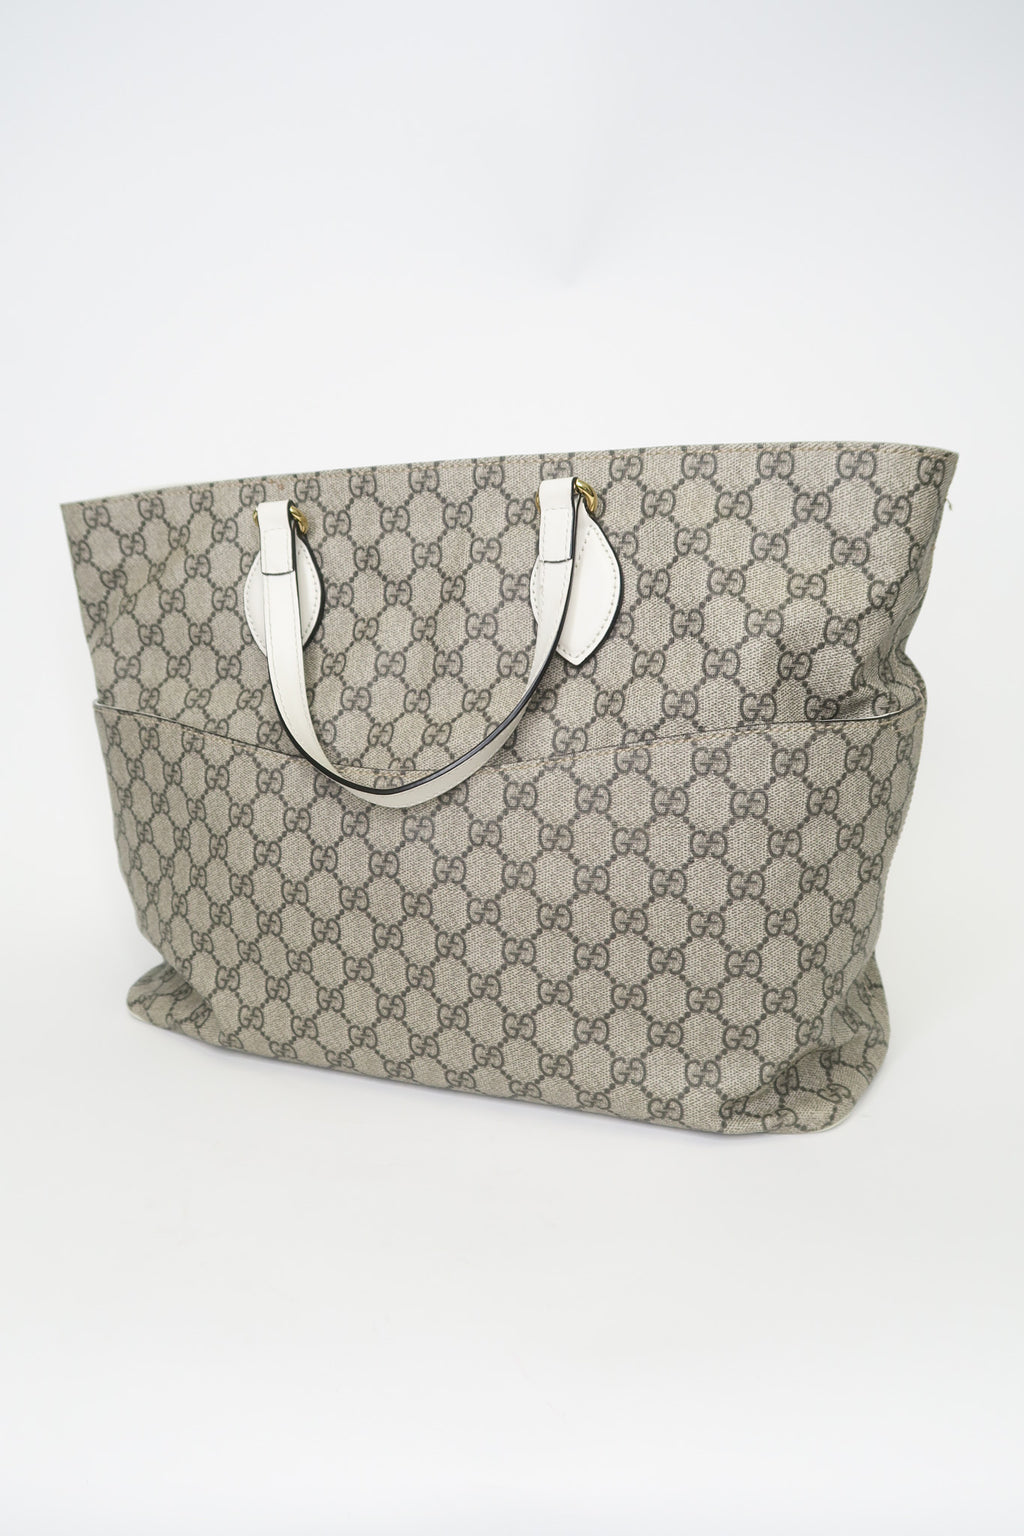 Louis Vuitton - Speedy Soft Trunk Shoulder bag - Catawiki